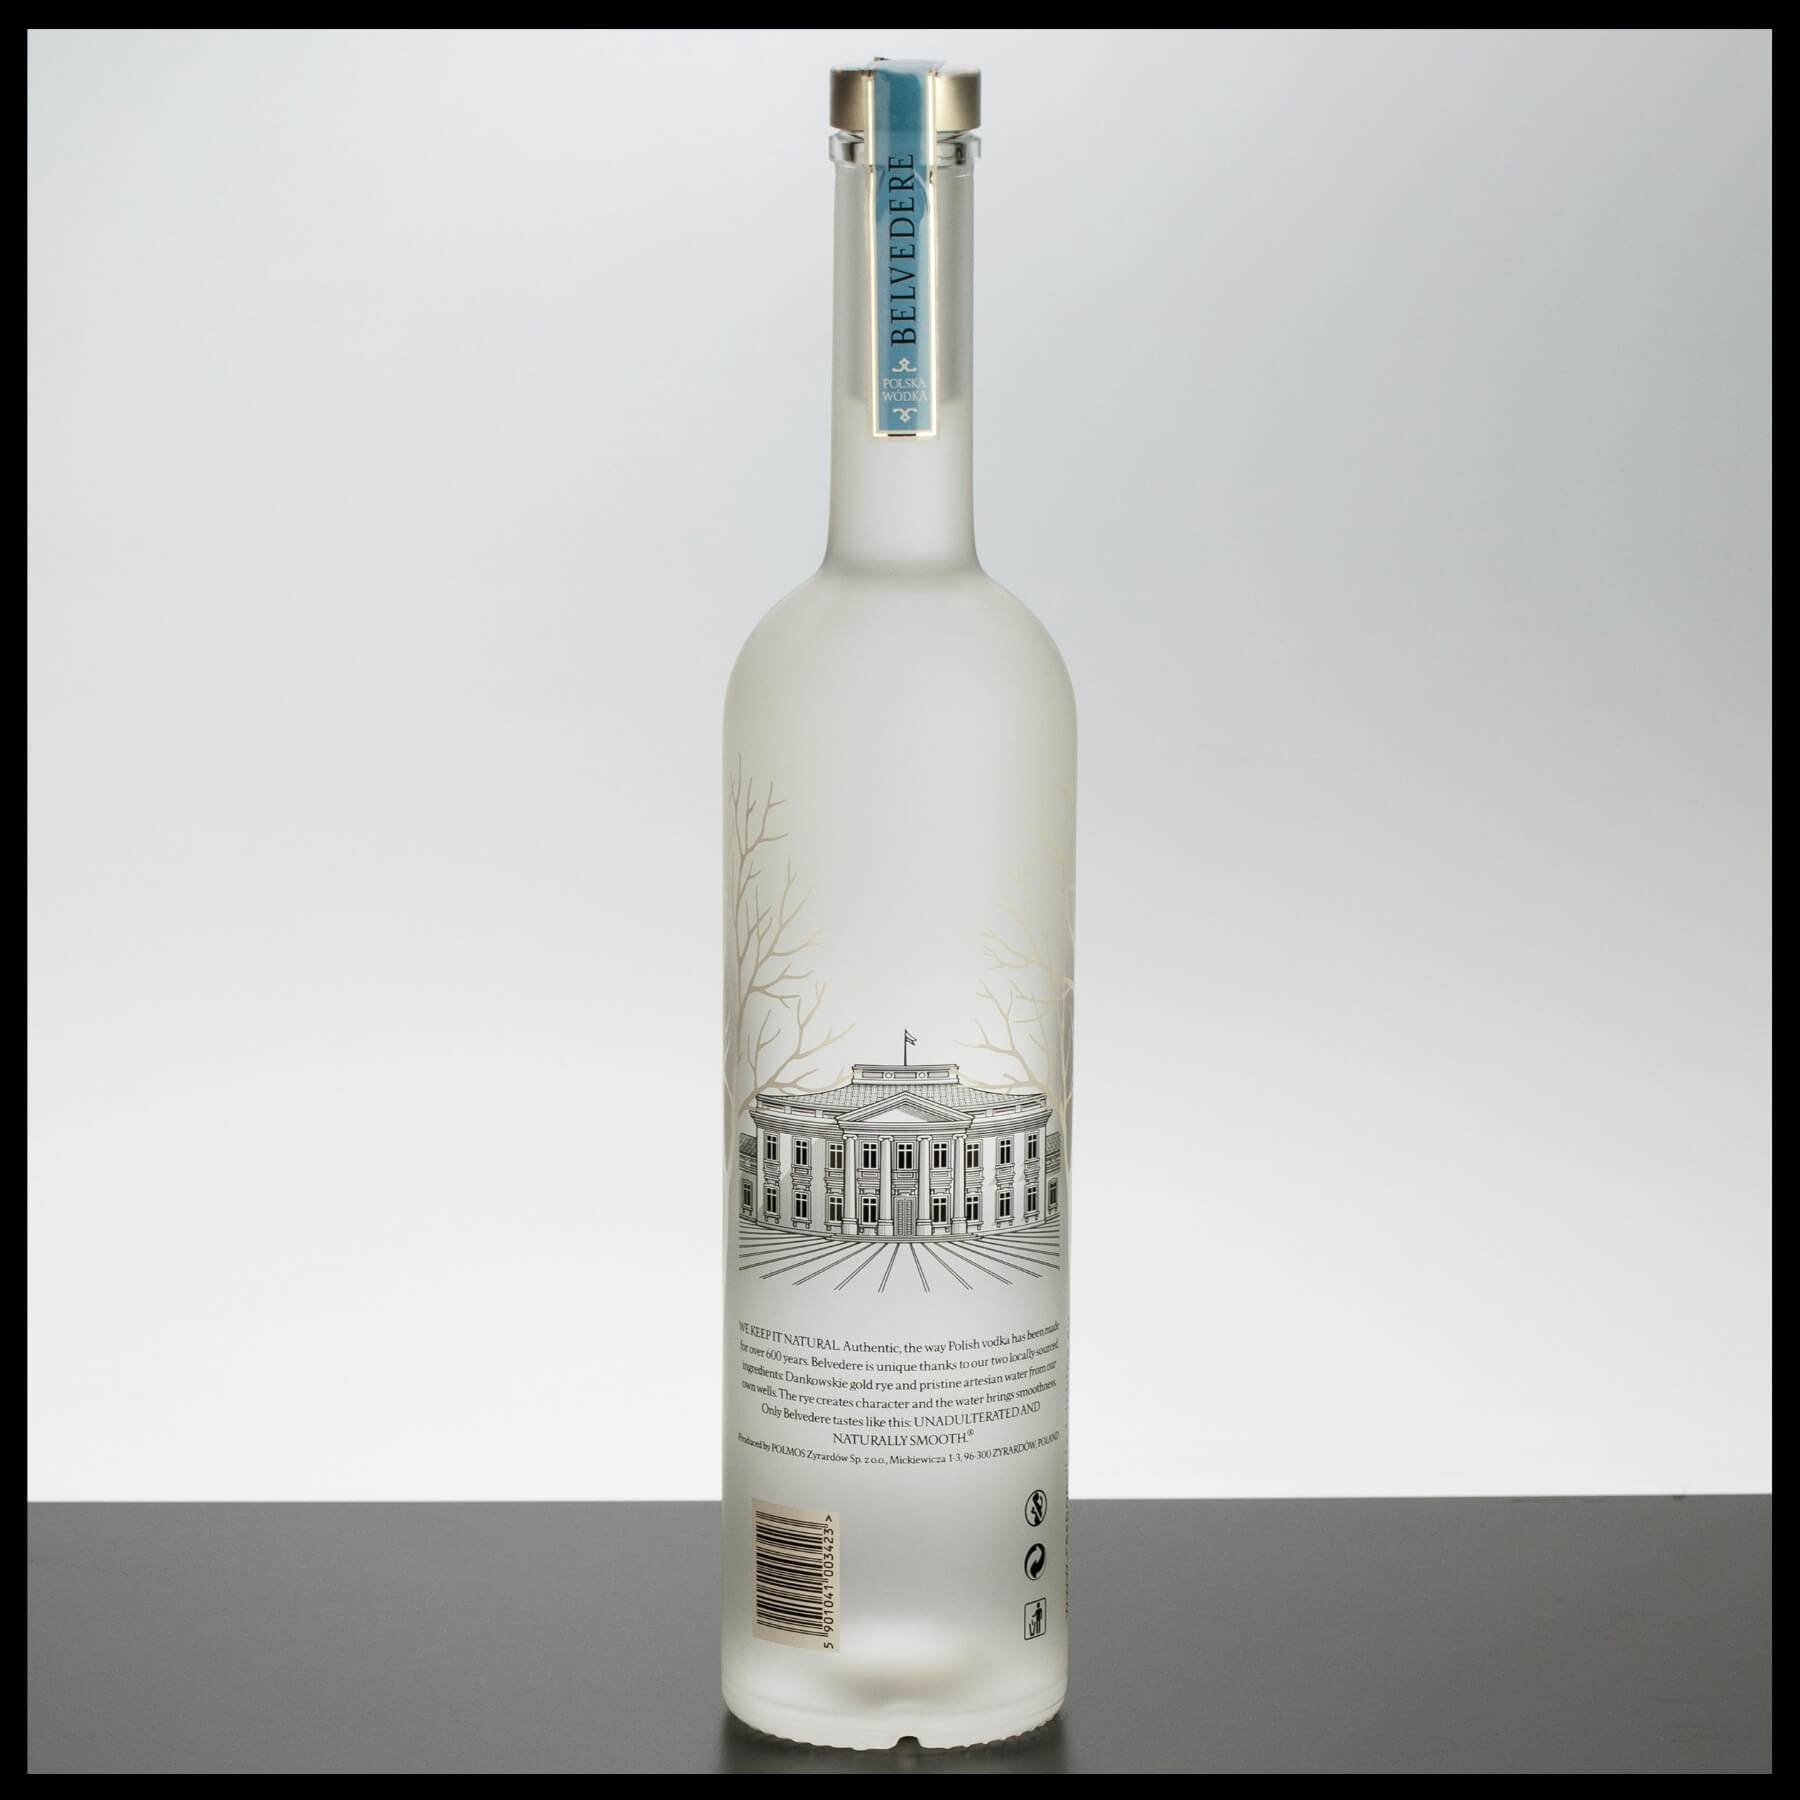 Belvedere Vodka 1,75L - 40% Vol. - Trinklusiv